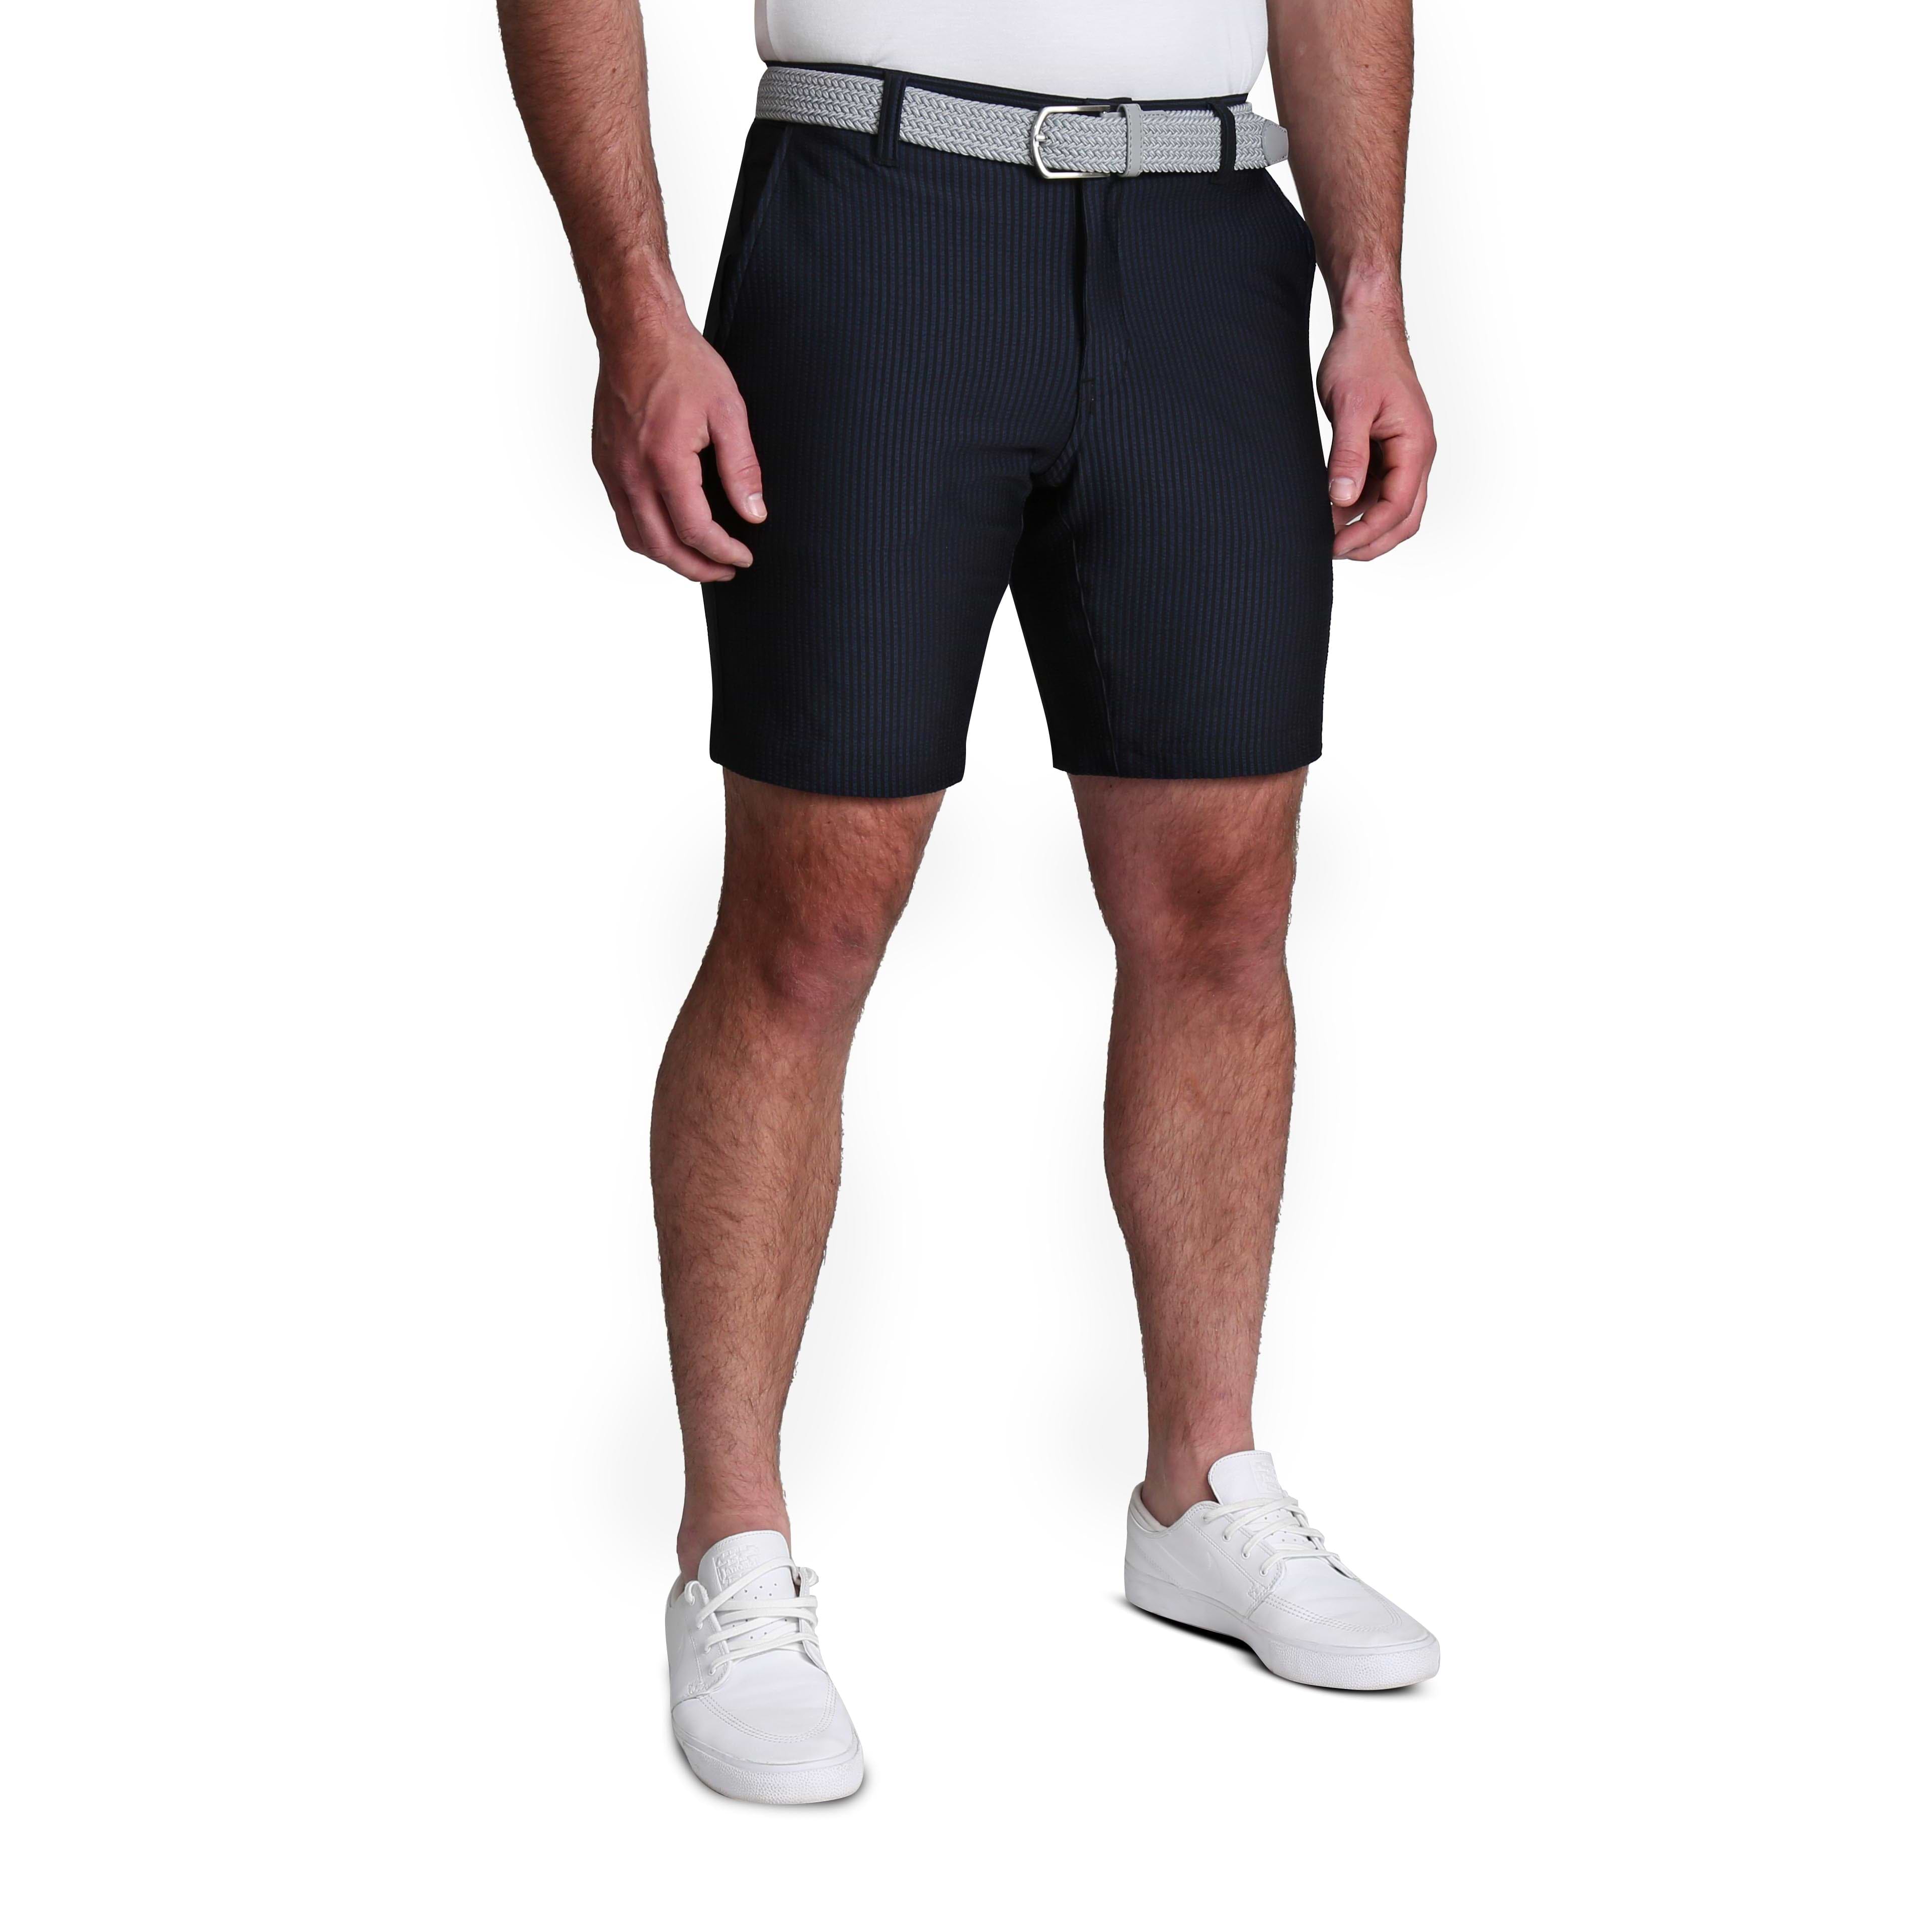 Athletic Fit Shorts - Navy Seersucker